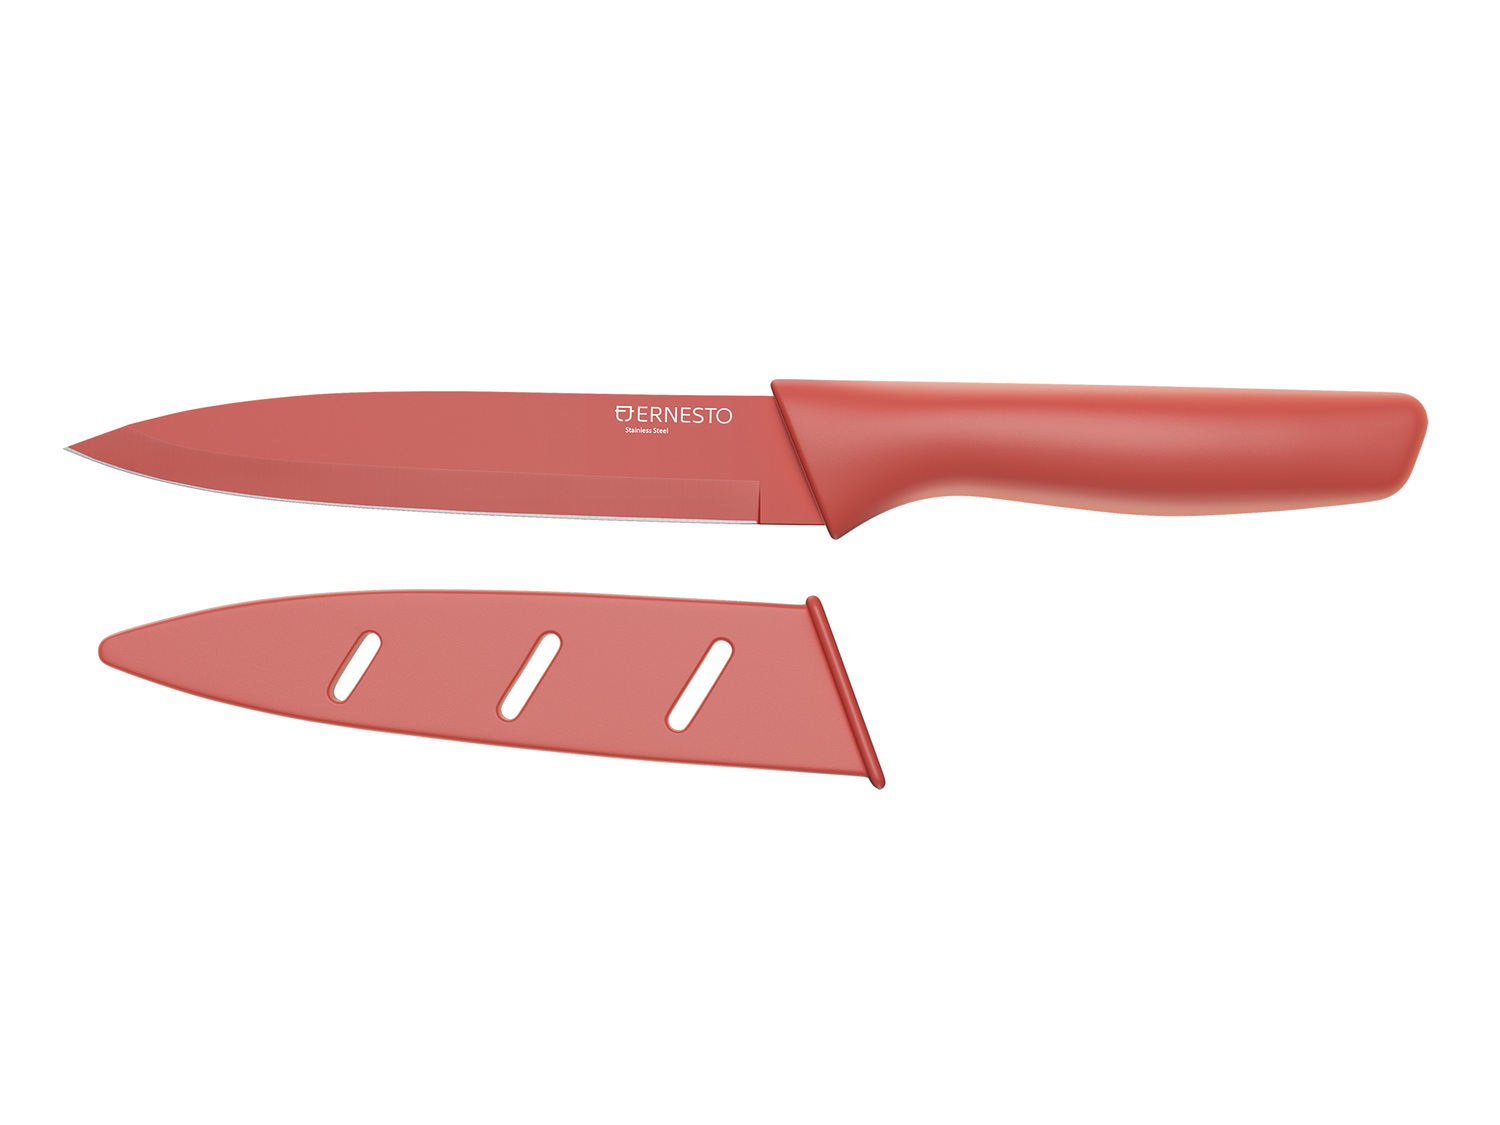 Nóż z osłoną ostrza Ernesto, cena 11,99 PLN 
3 kolory 
- ostrze ze stali szlachetnej
- ...